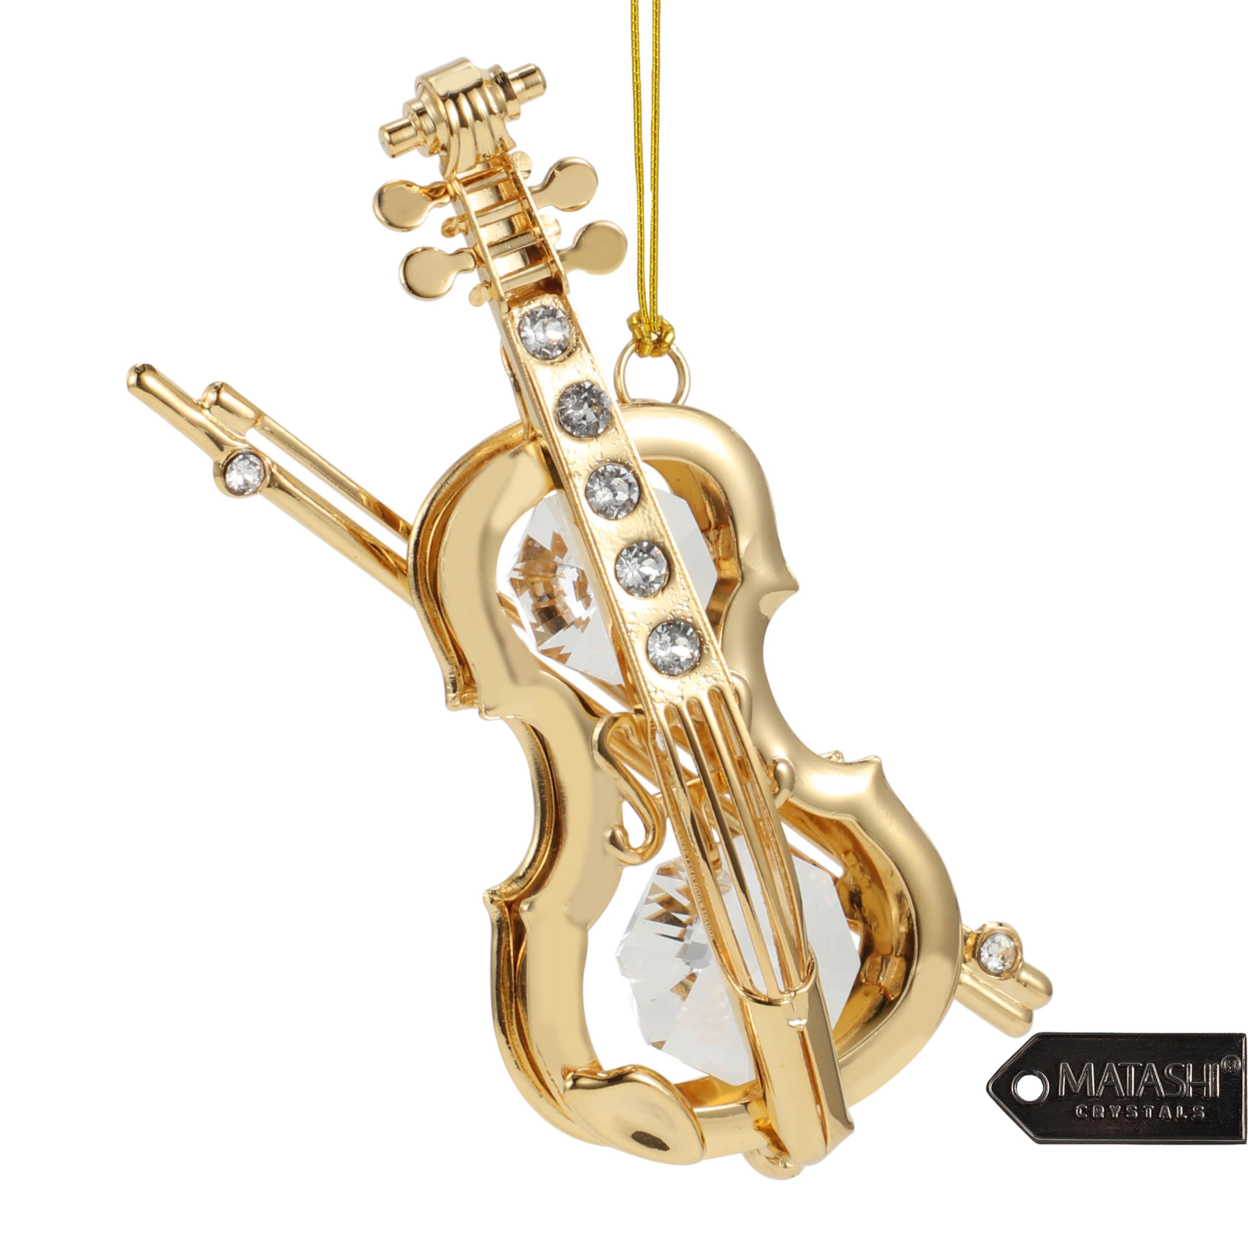 Matashi 24K Gold Plated Crystal Studded Violin And Bow Ornament Holiday Decor Gift For Christmas Mother's Day Birthday Anniversary